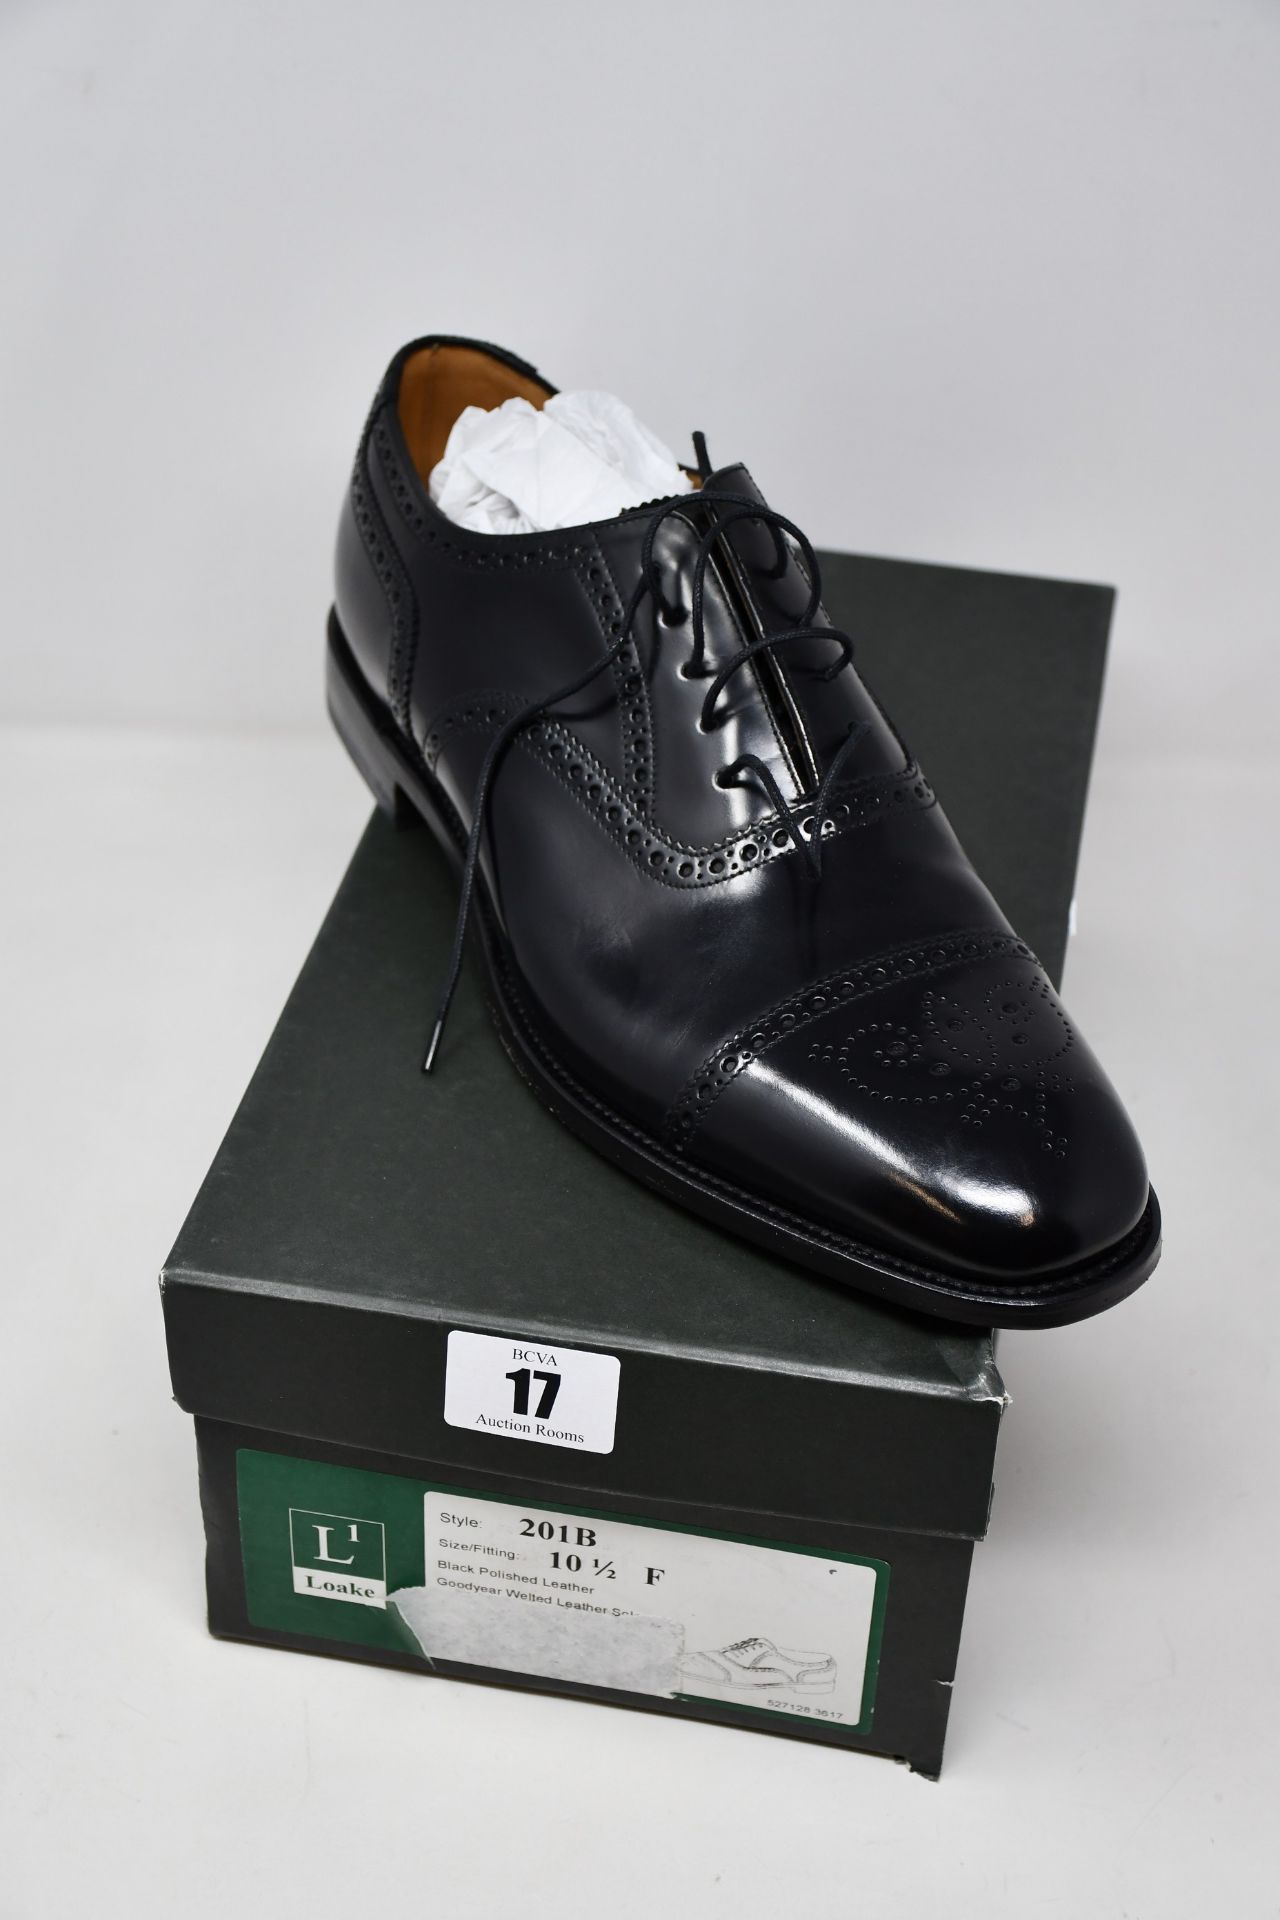 A pair of men's as new Loake 201B Semi-brogue shoes (UK 10.5F).